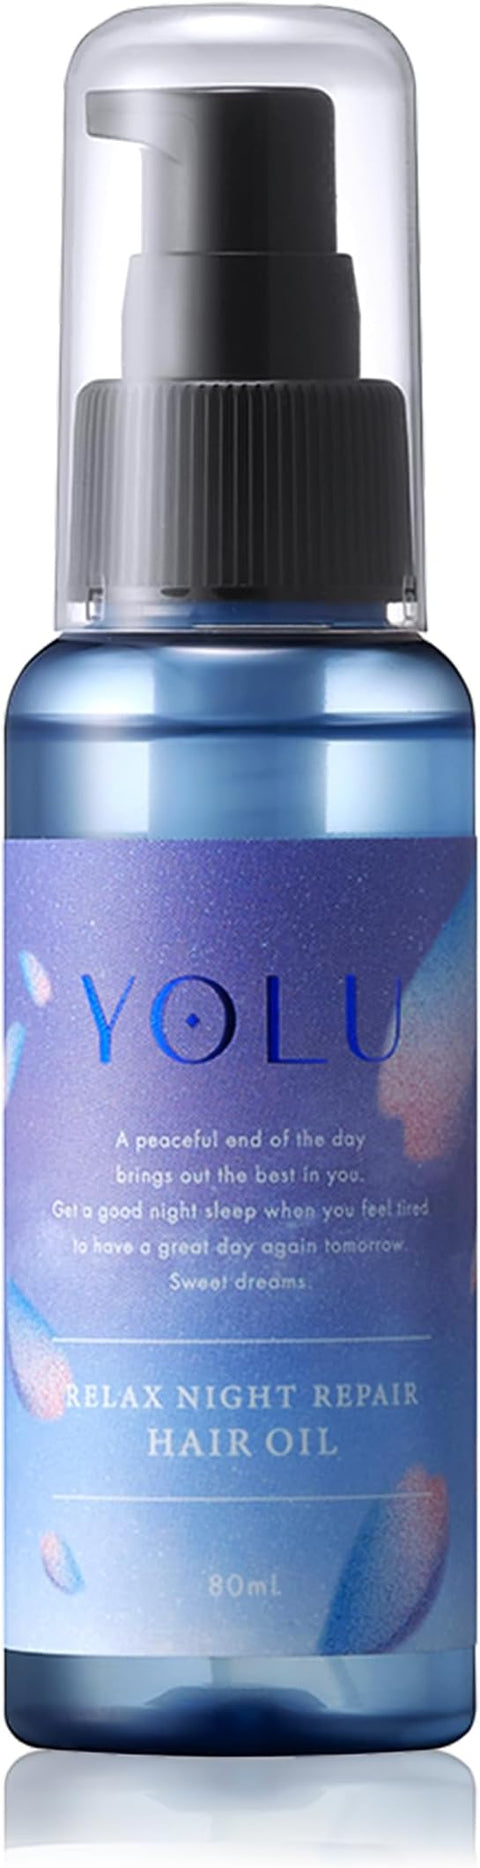 Yolu Yol Hair Oil